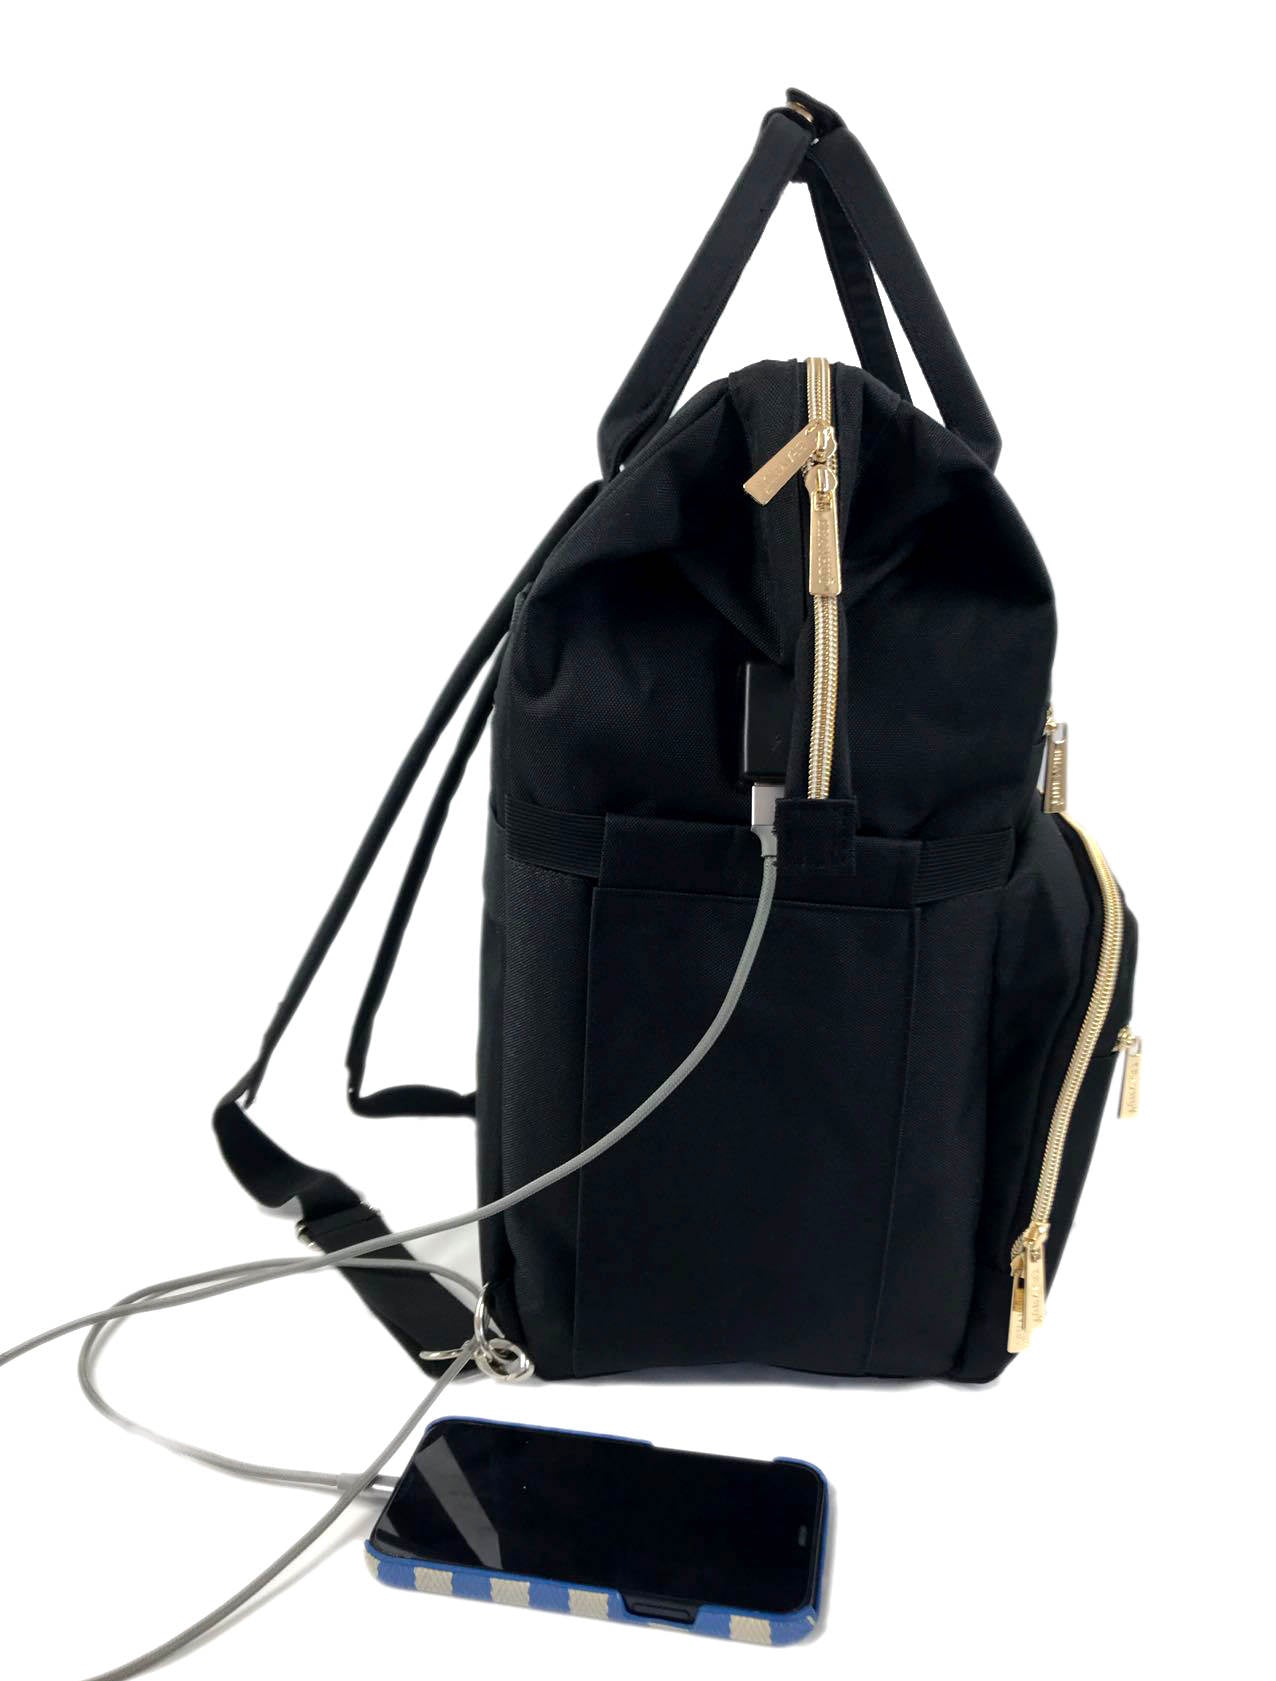 Teacher Tote Bag - Laptop Backpack For Educators, Preschool, high school, college Professor